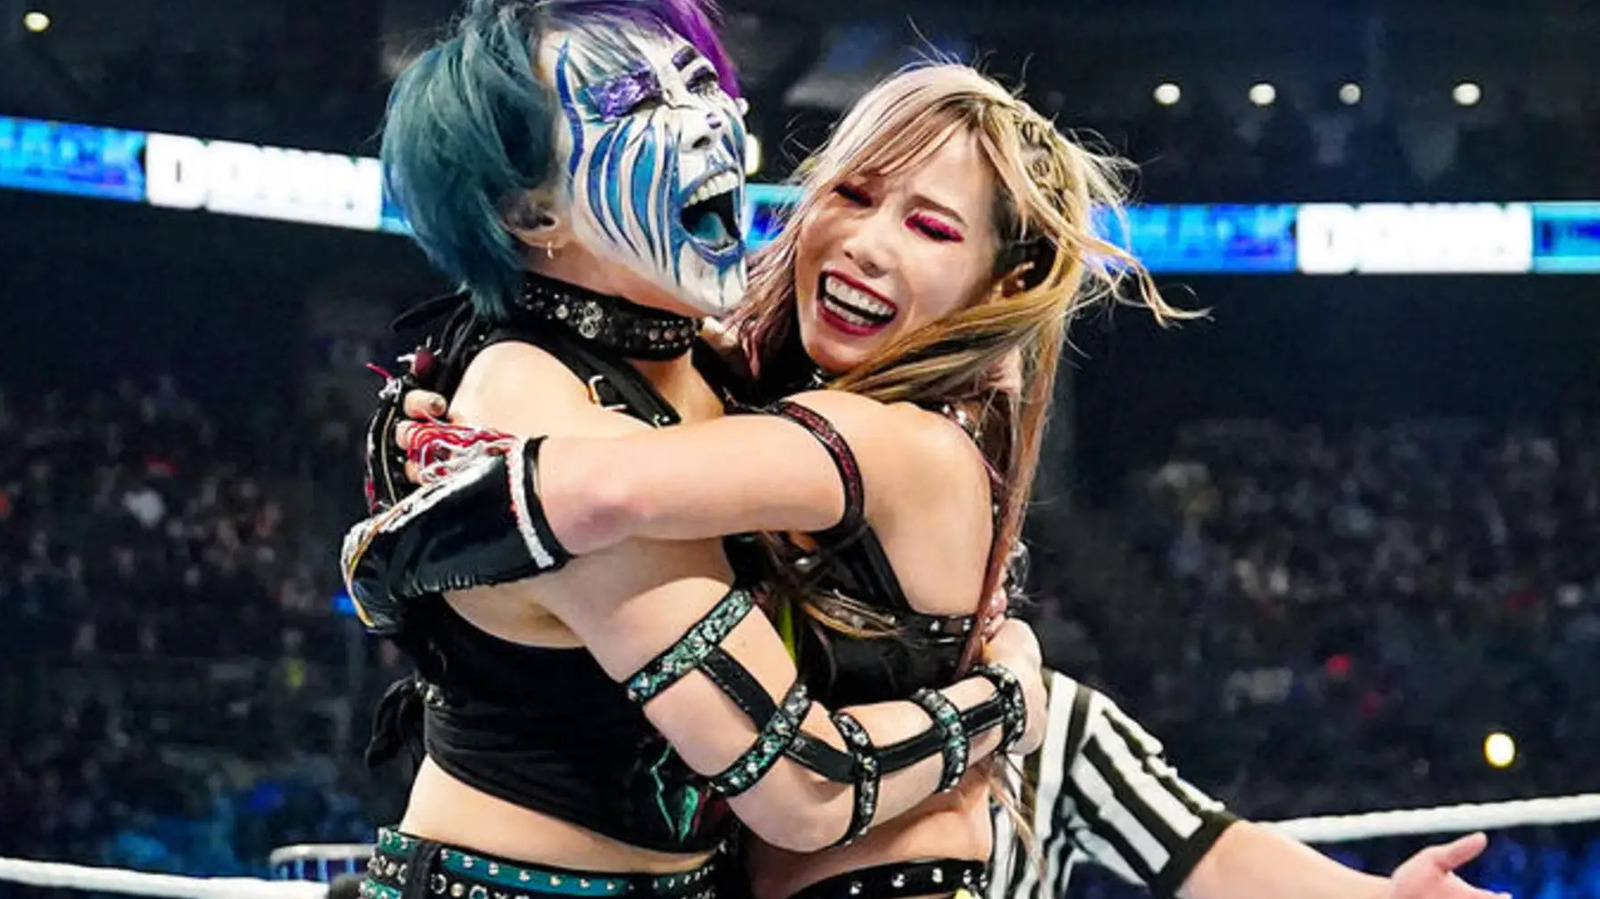 Asuka And Kairi Sane Claim WWE Women's Tag Titles For Damage CTRL On SmackDown